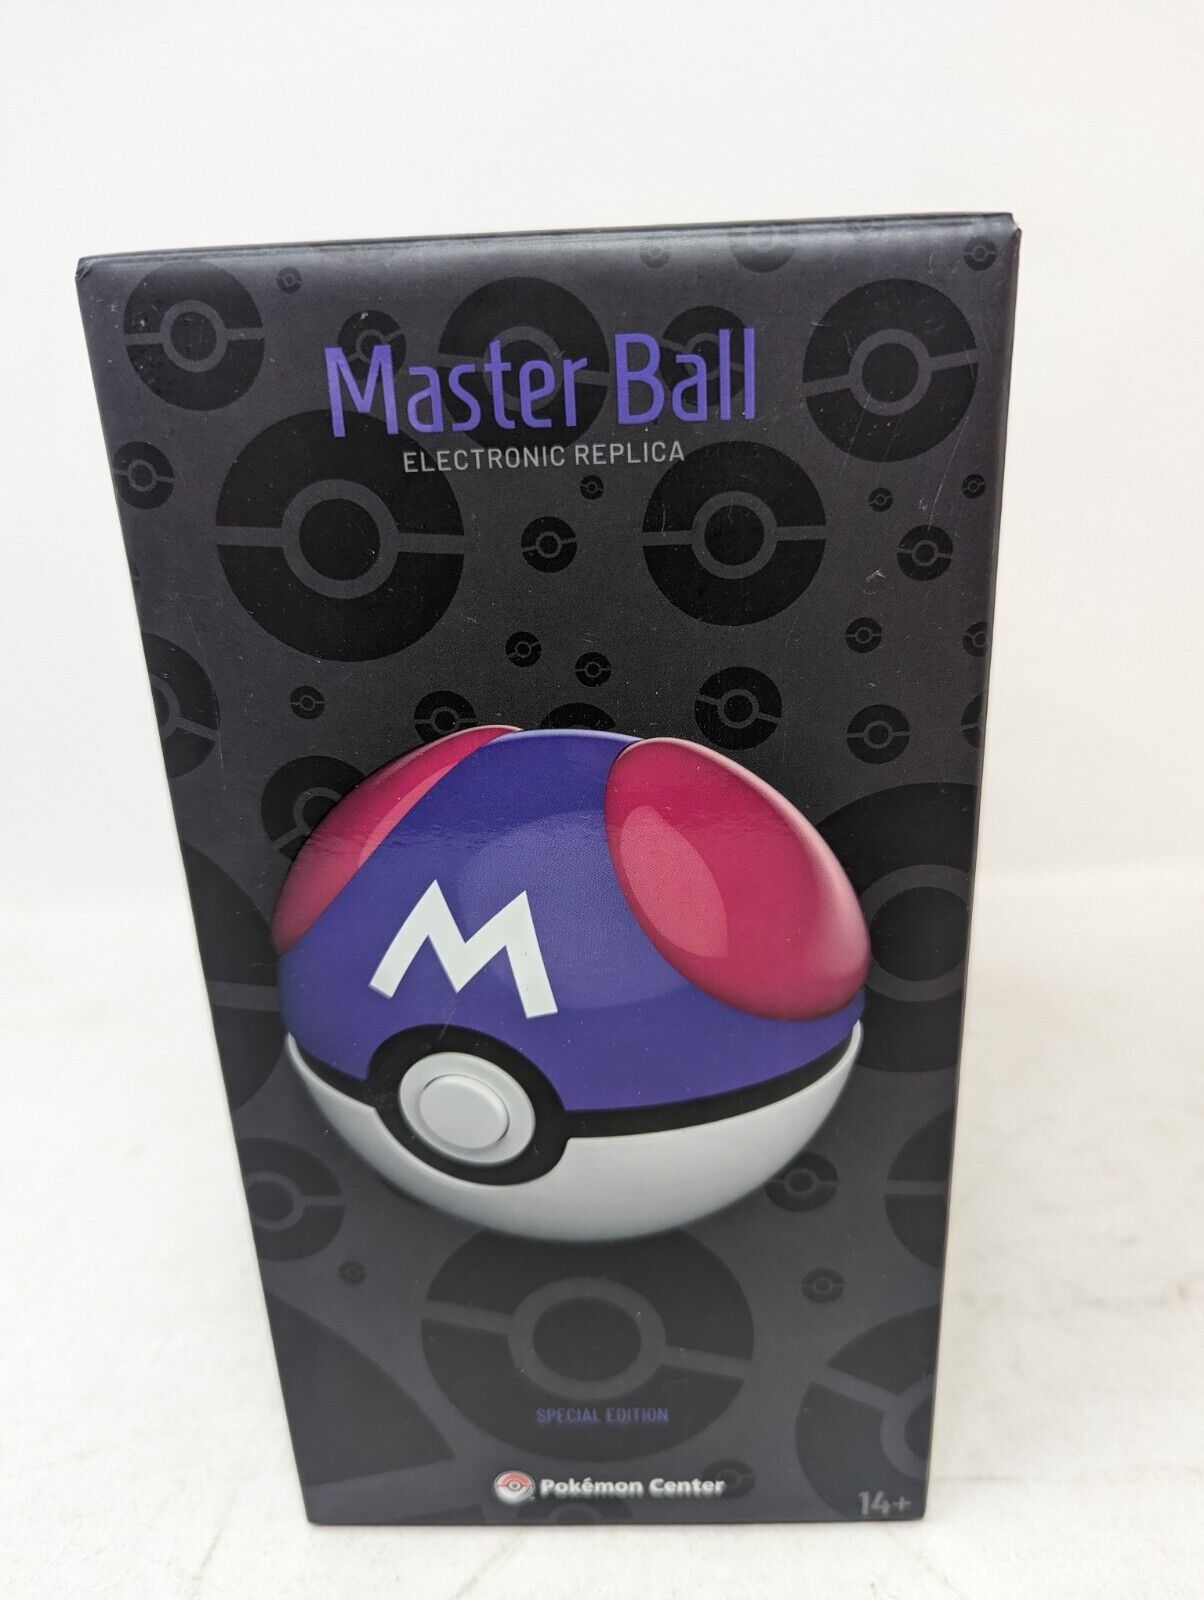 Pokémon Master Ball by Wand Company  - NEW - US SELLER